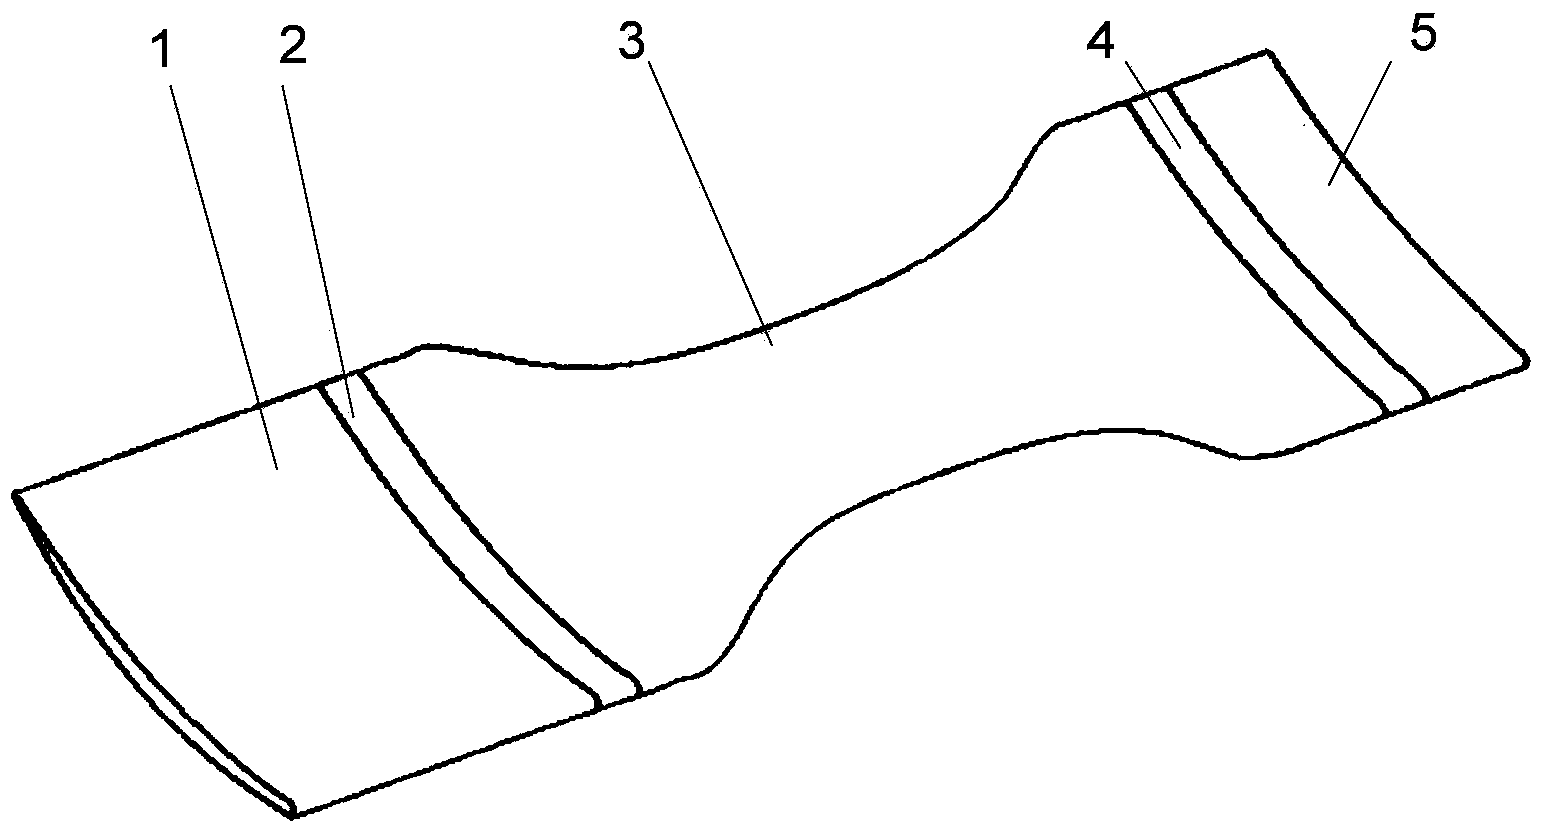 Method for building blade rolling process model